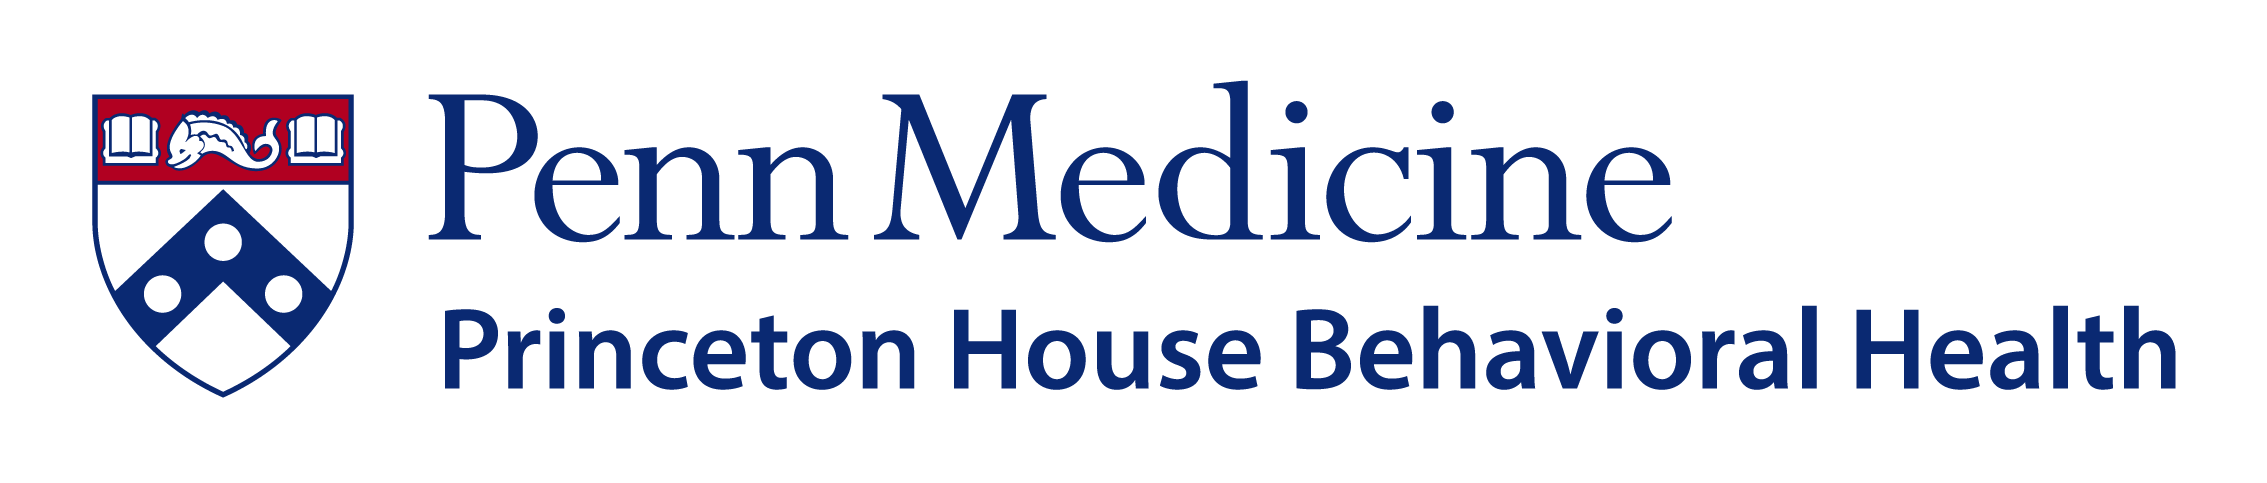 Penn Medicine Princeton House Behavioral Health